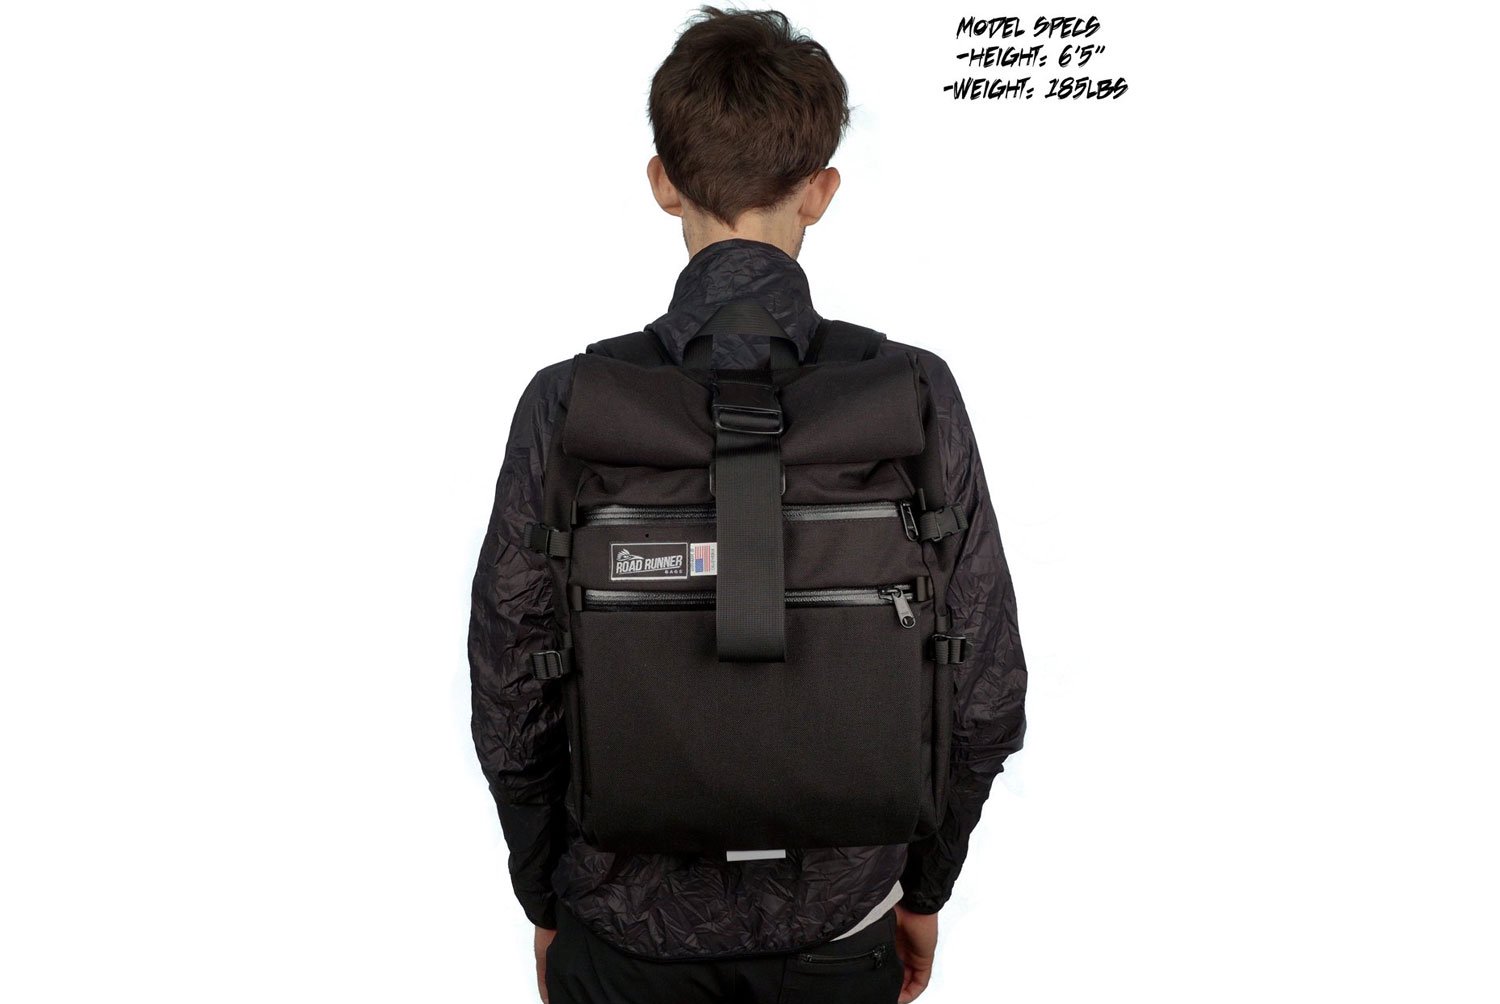 Medium Roll Top Backpack-Pro (ミディアムロールトップバッグ・プロ) - ROAD RUNNER BAGS オンラインストア